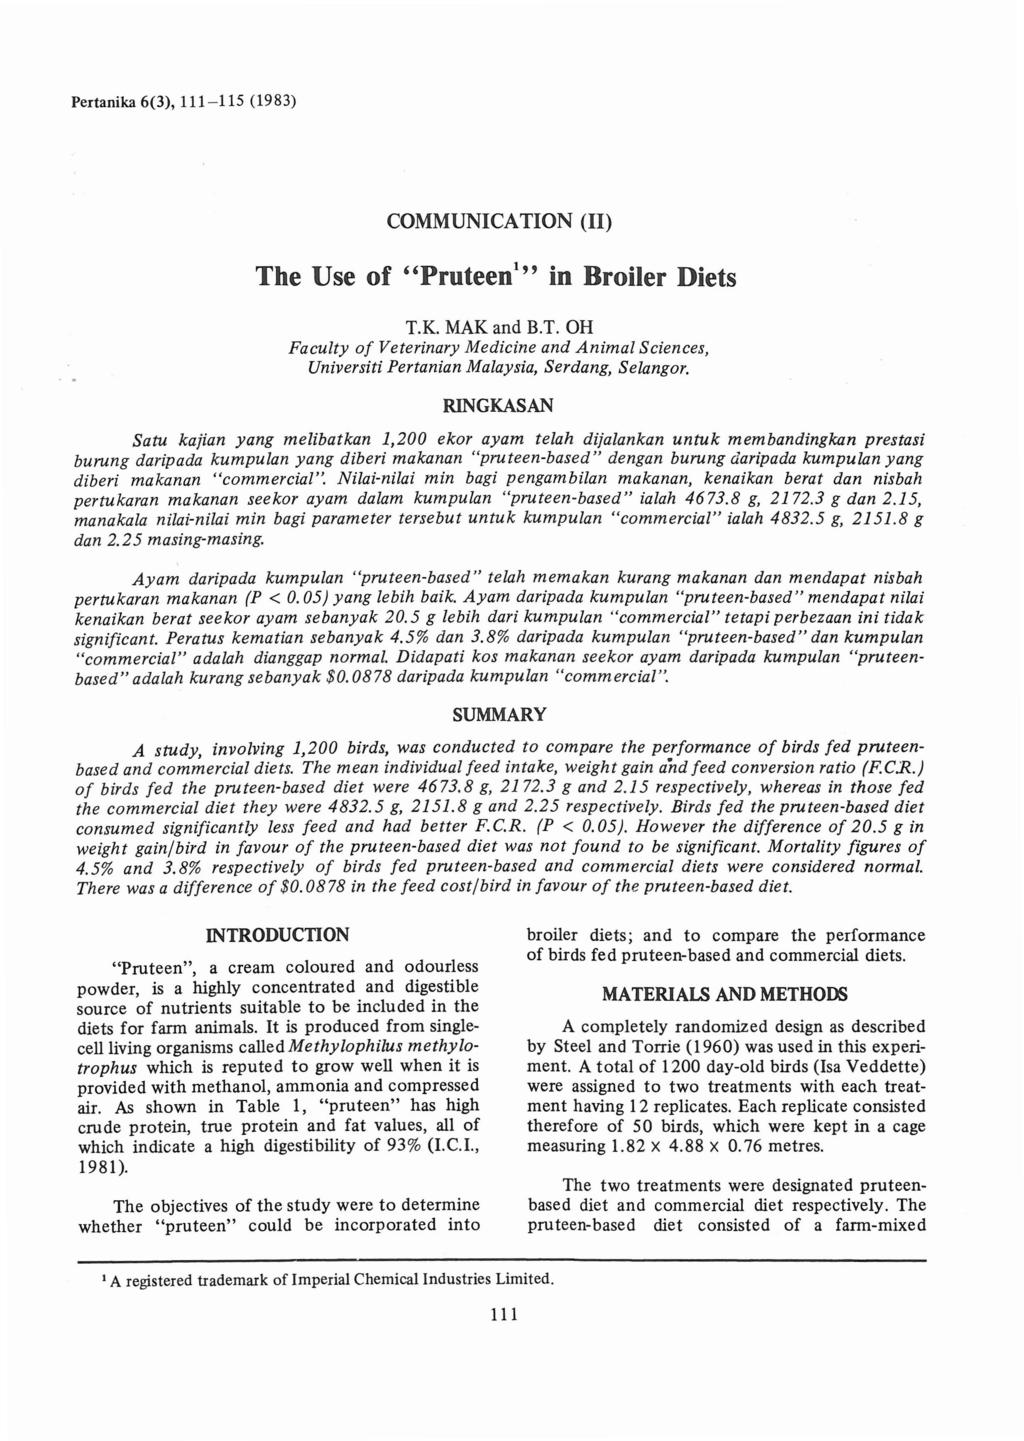 Pertanika 6(3),111-115 (1983) COMMUNICATION (II) The Use of "Pruteen 1 " in Broiler Diets T.K. MAK and B.T. OH Faculty of Veterinary Medicine and Animal Sciences, Universiti Pertanian Malaysia, Serdang, Selangor.